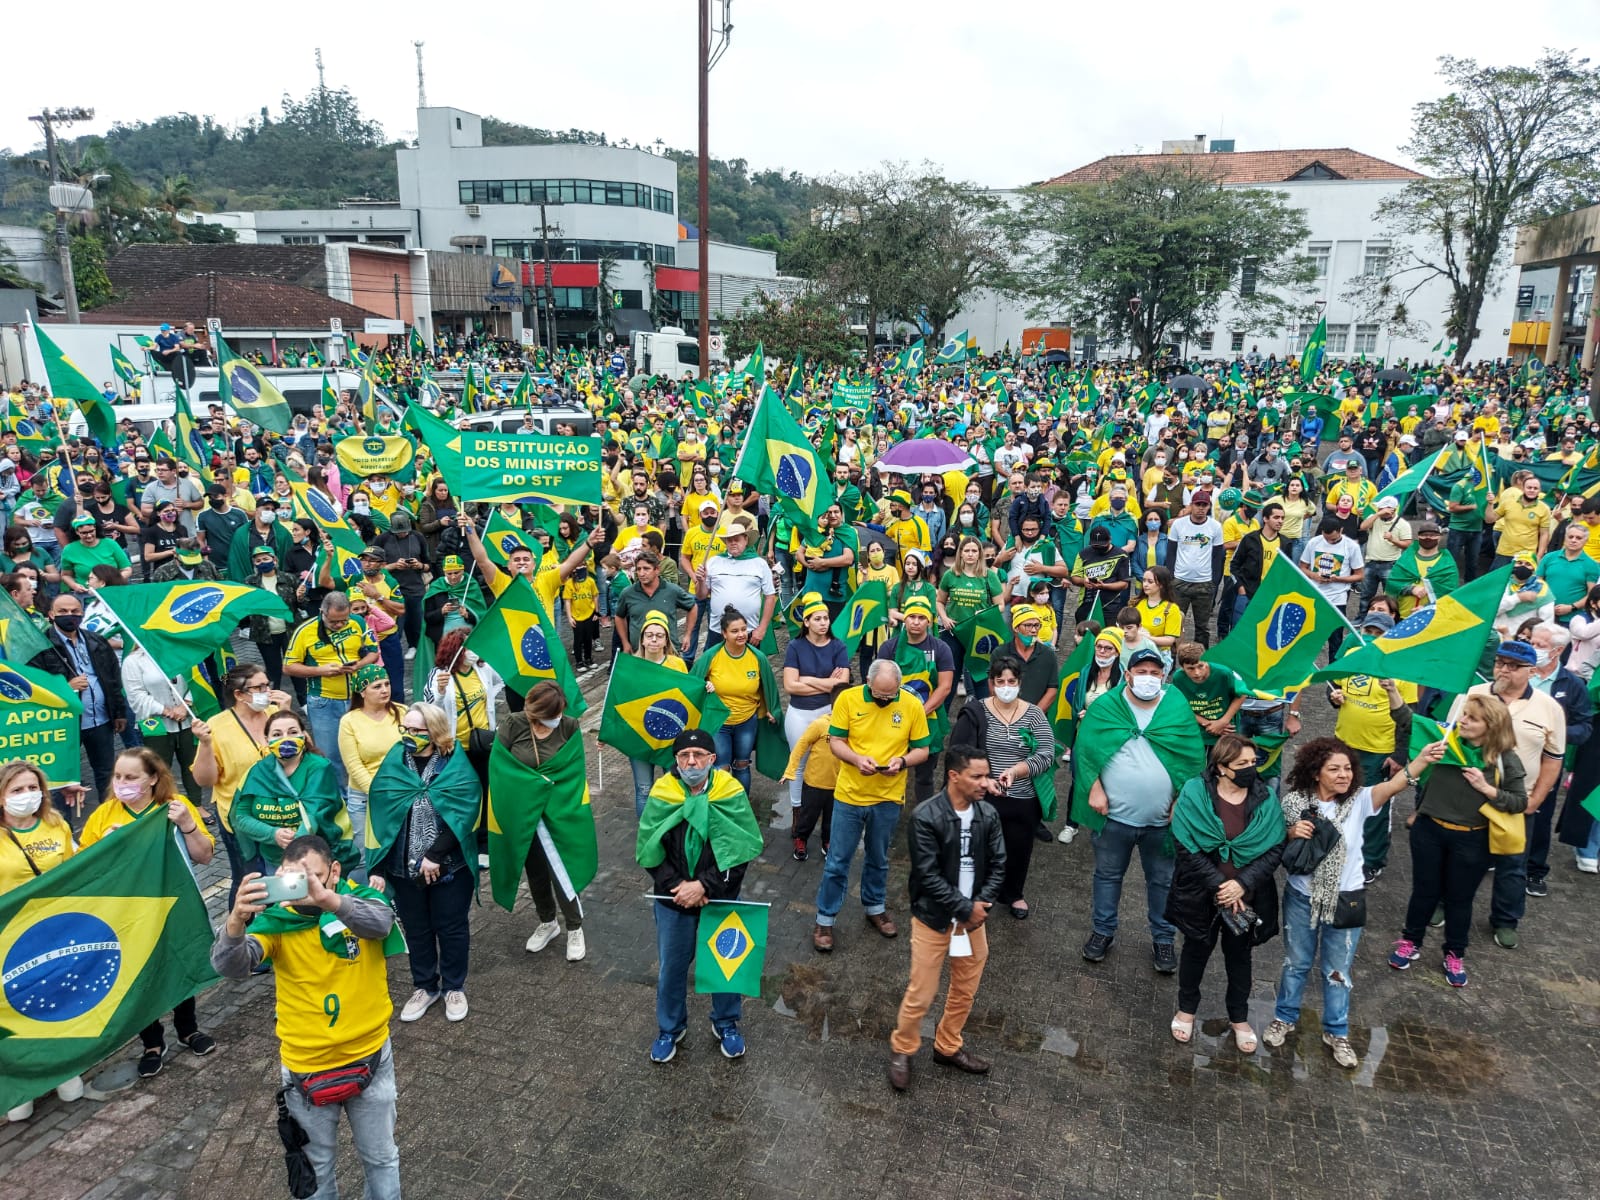 Foto: Fábio Junkes/OCP News